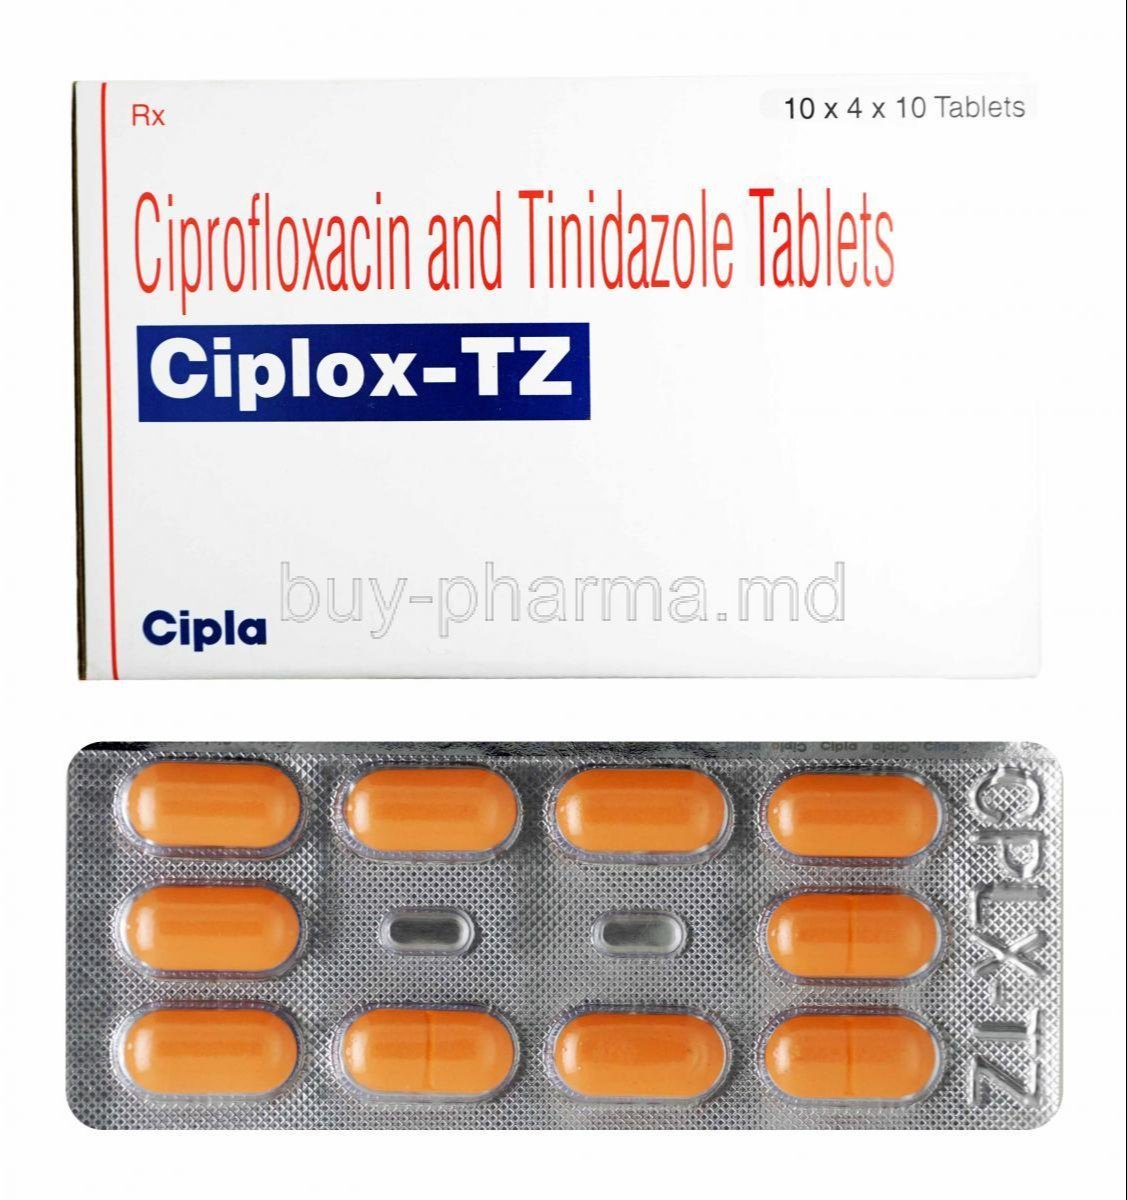 ciplox tz is antibiotic